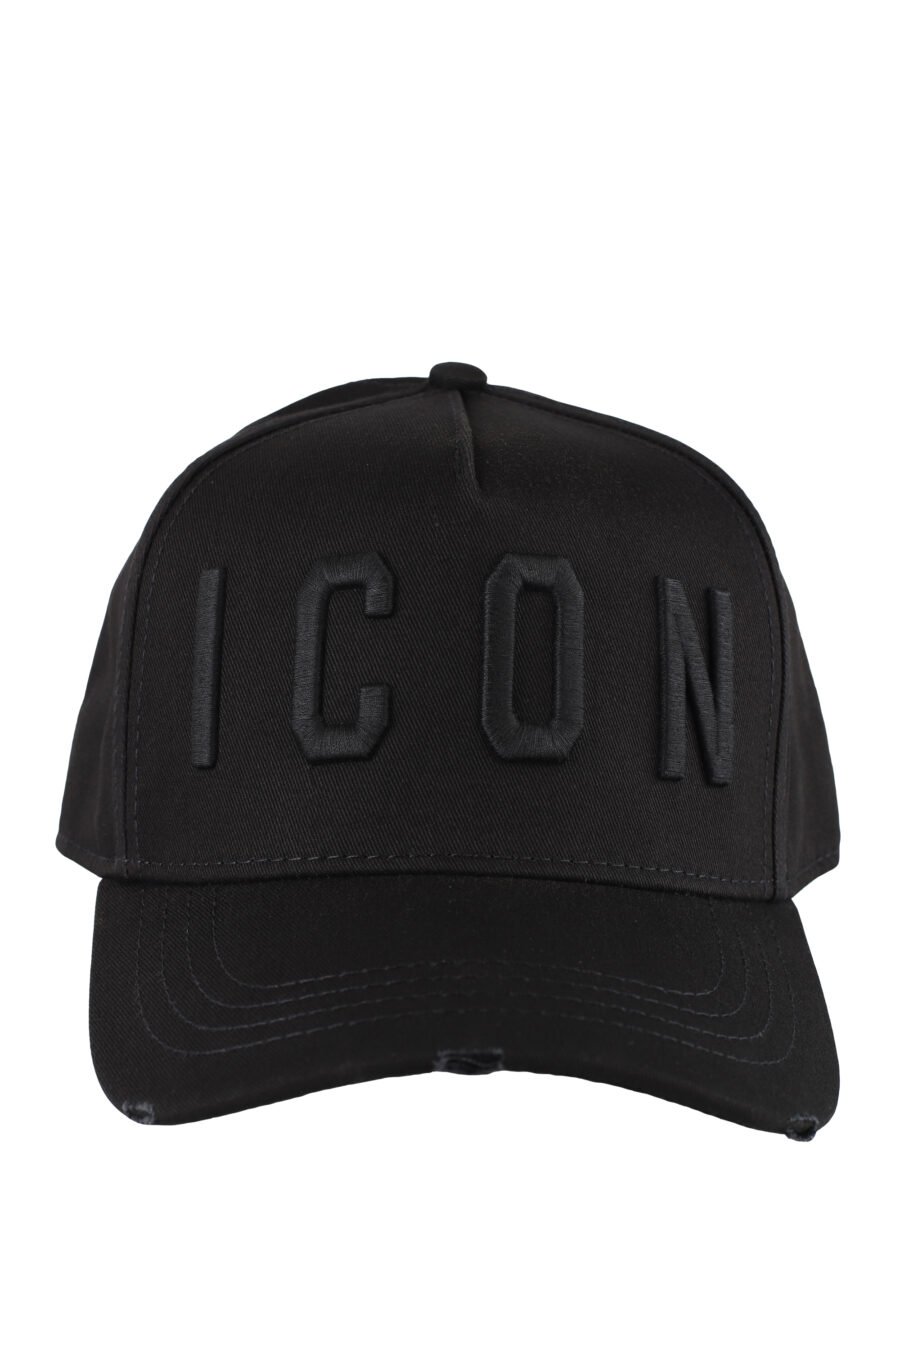 Schwarze Kappe mit einfarbigem "Icon"-Logo - IMG 5164